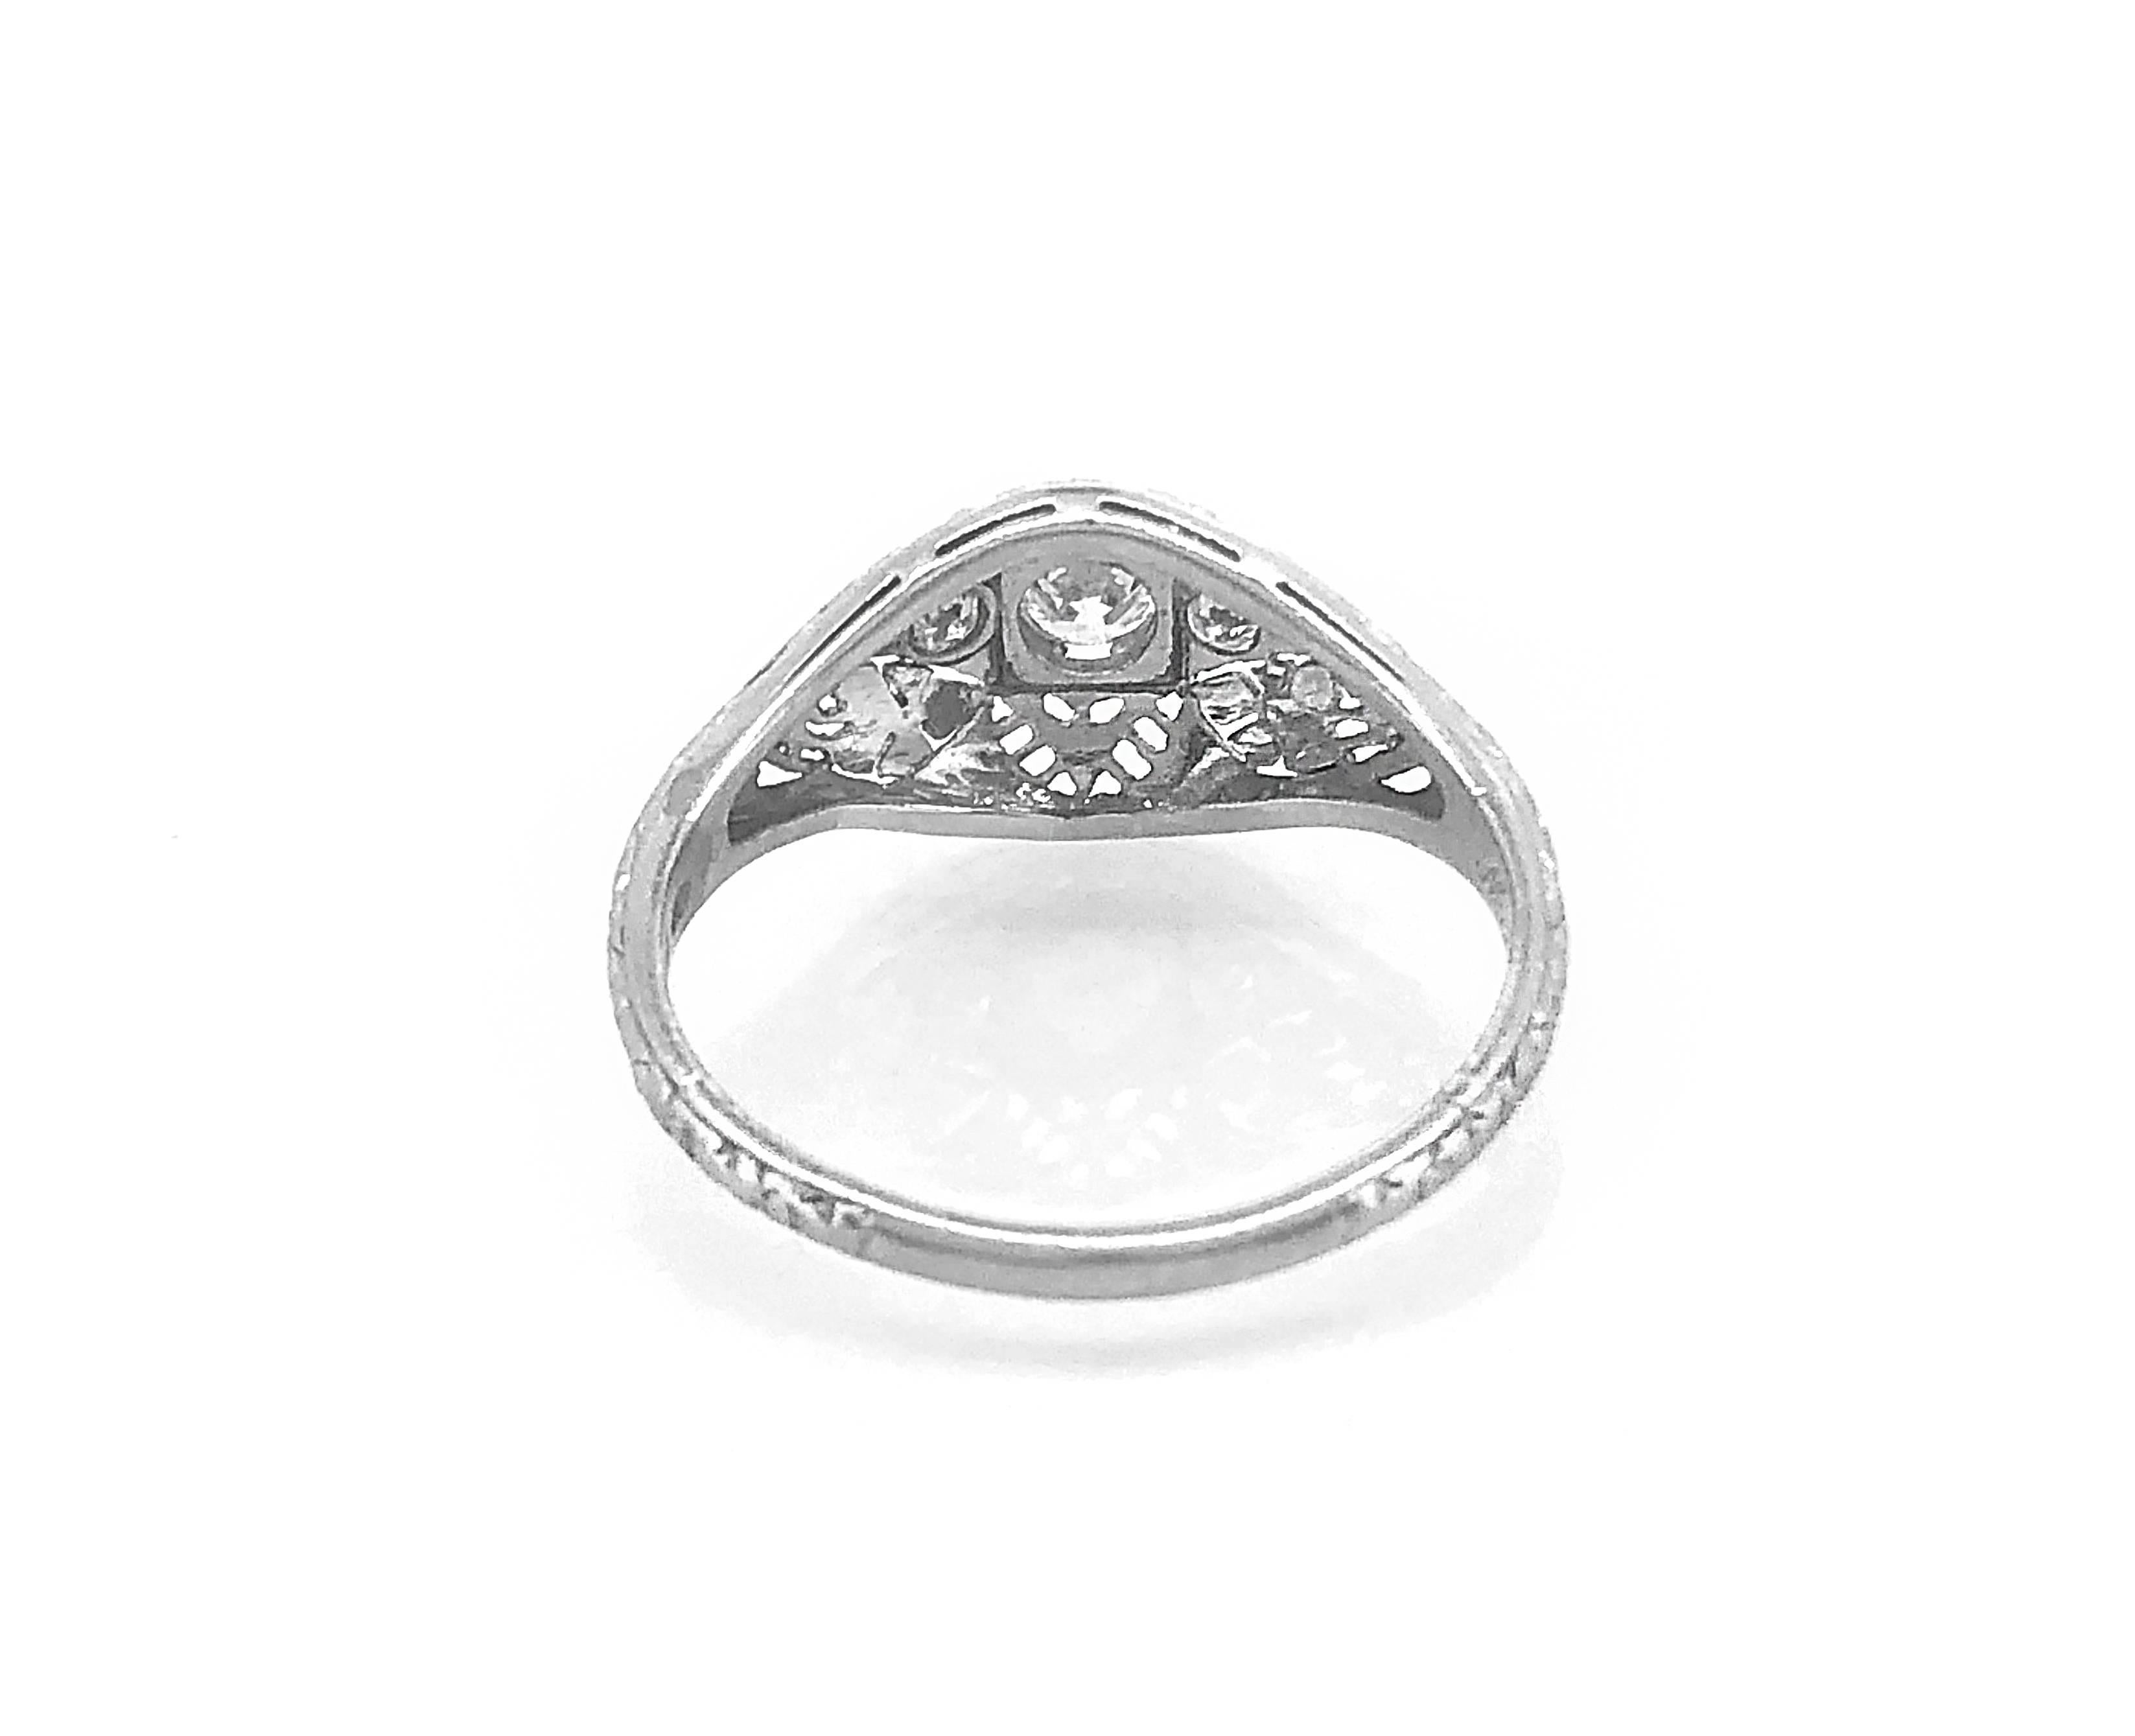 20 carat diamond ring for sale